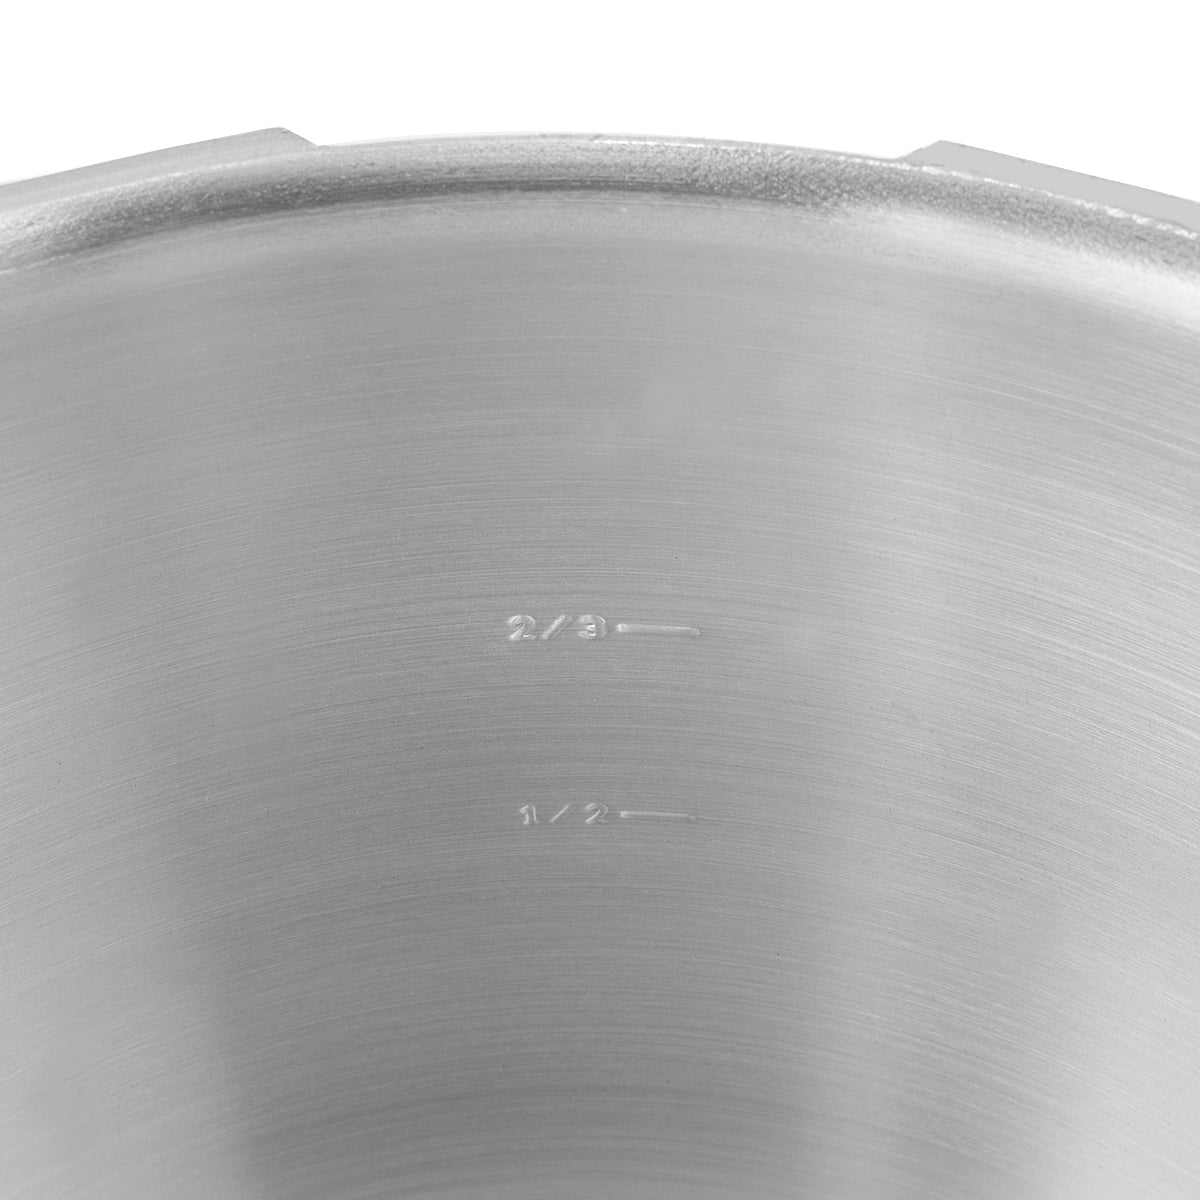 Barton 23 qt. Aluminum Stovetop Pressure Cookers Pot Quick Release Pressure Gauge with Rack